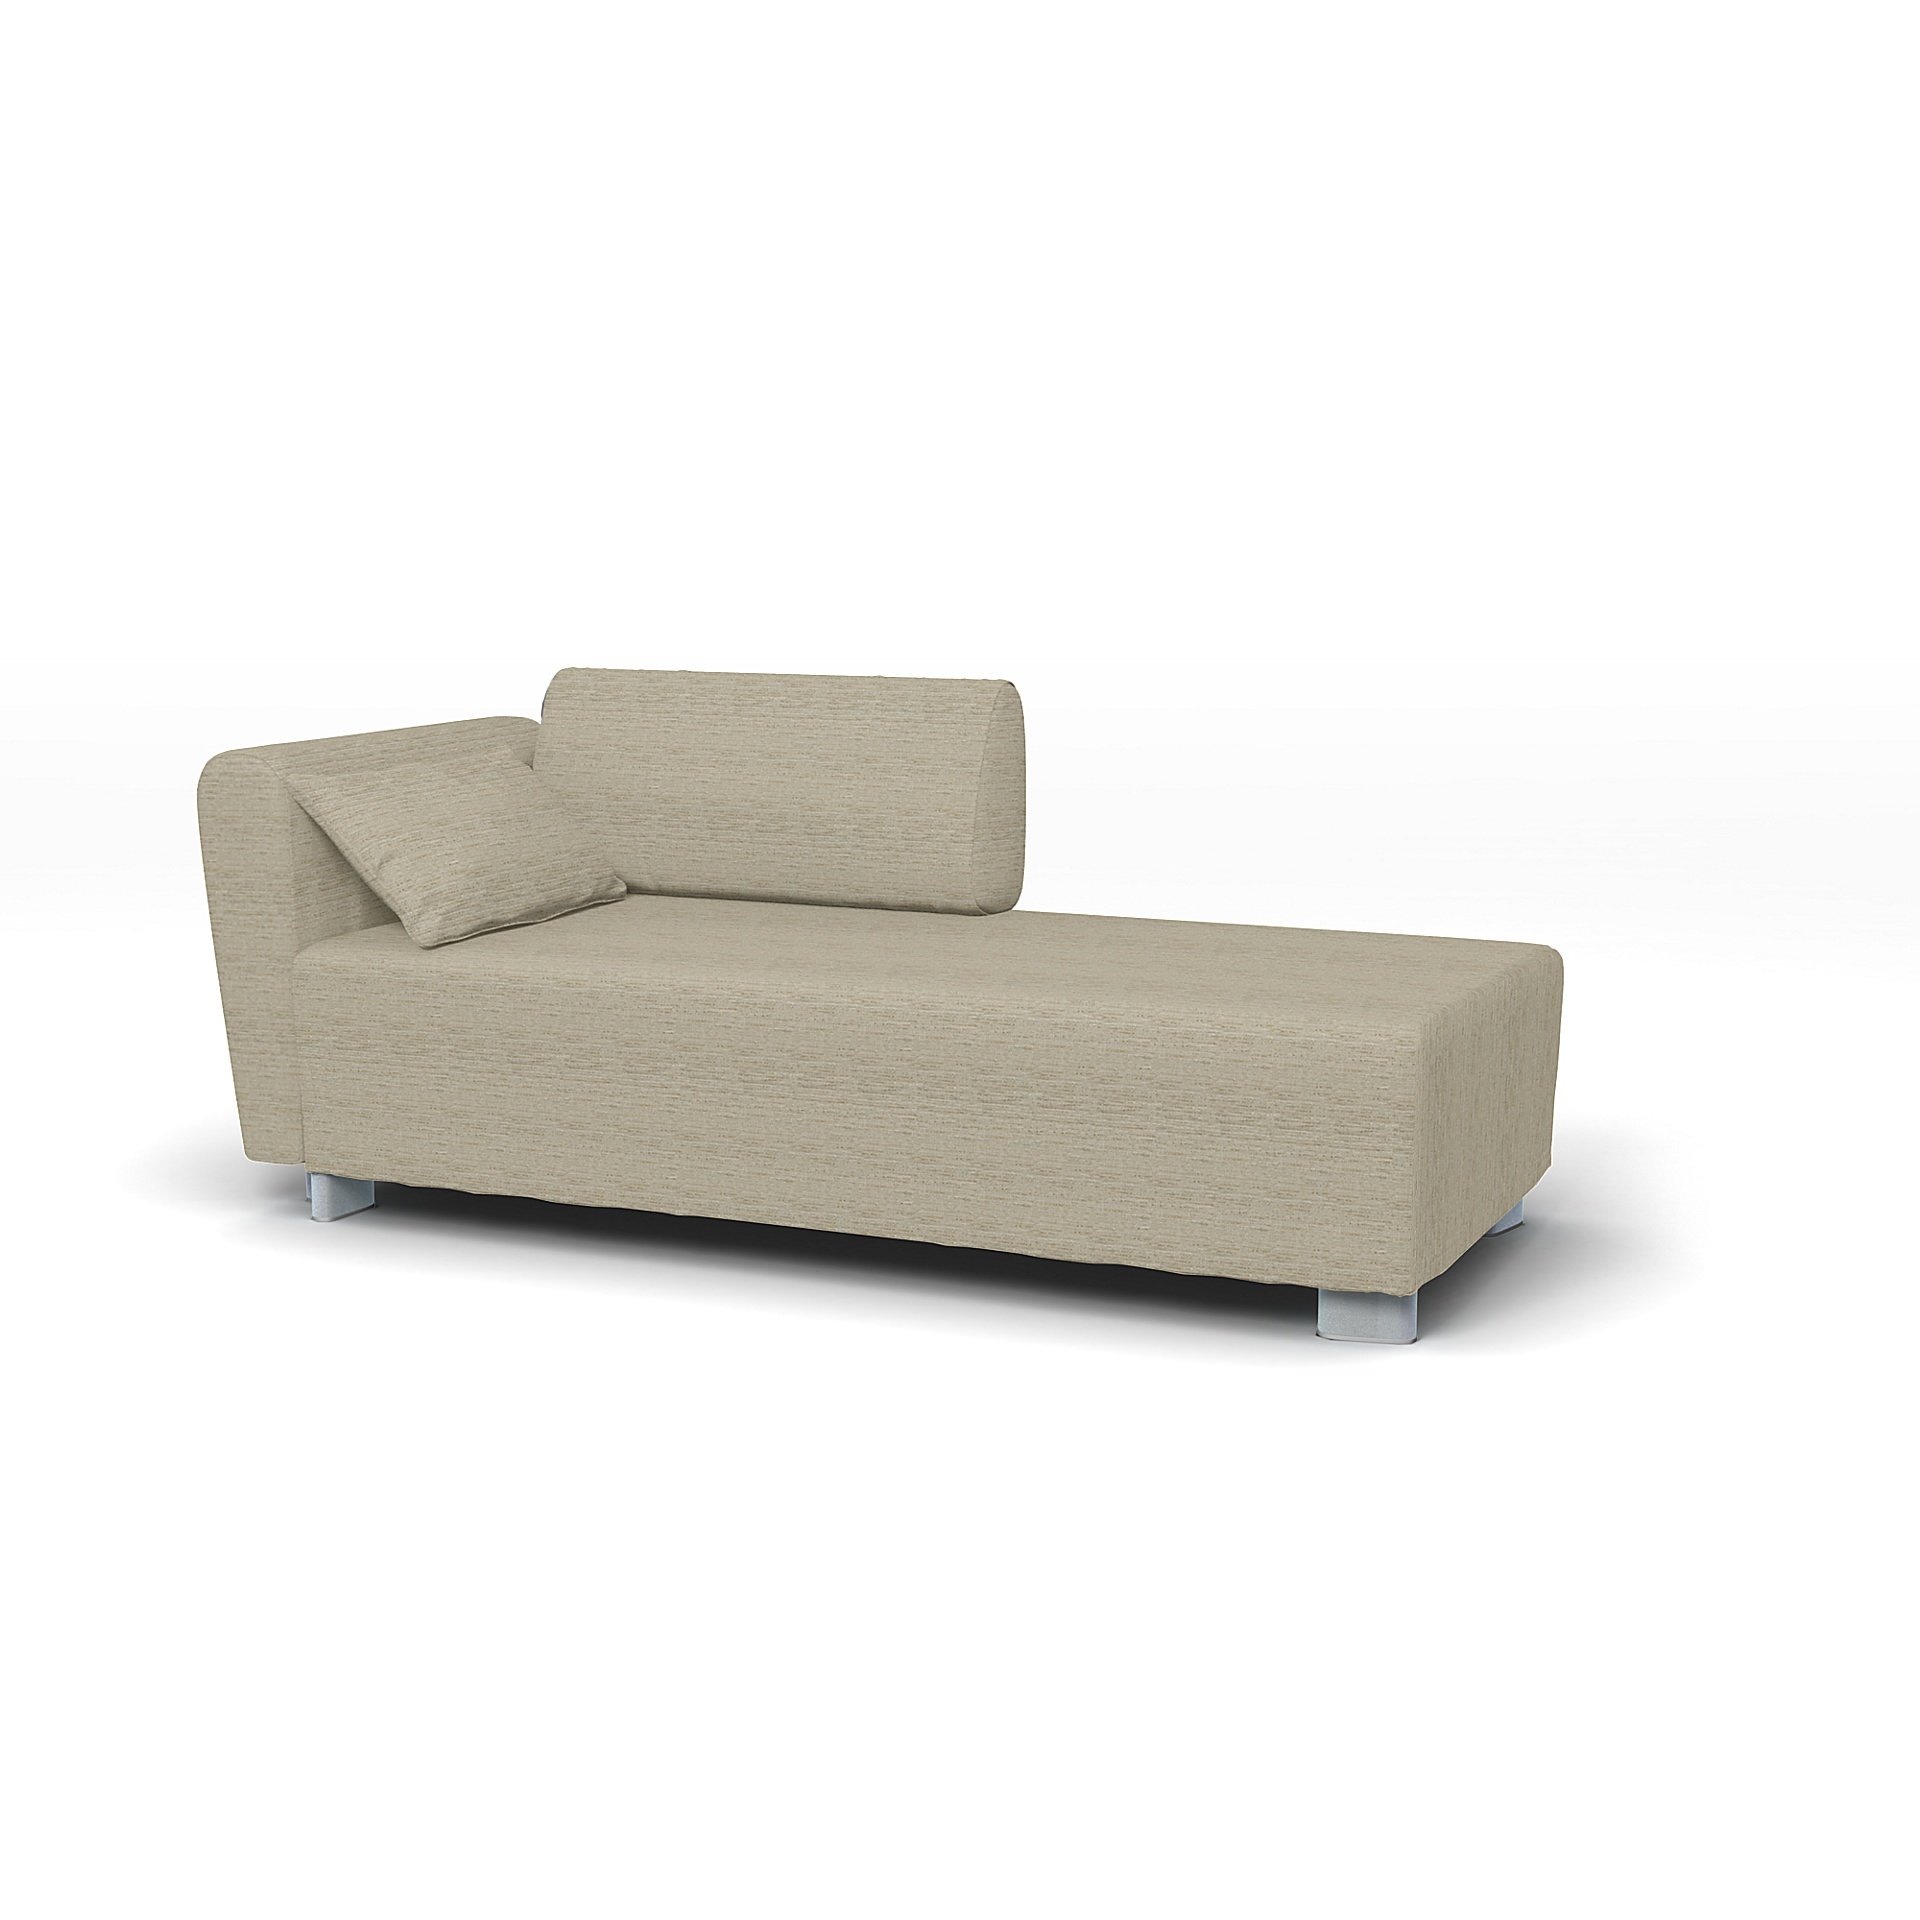 IKEA - Mysinge Chaise Longue with Armrest Cover, Light Sand, Boucle & Texture - Bemz